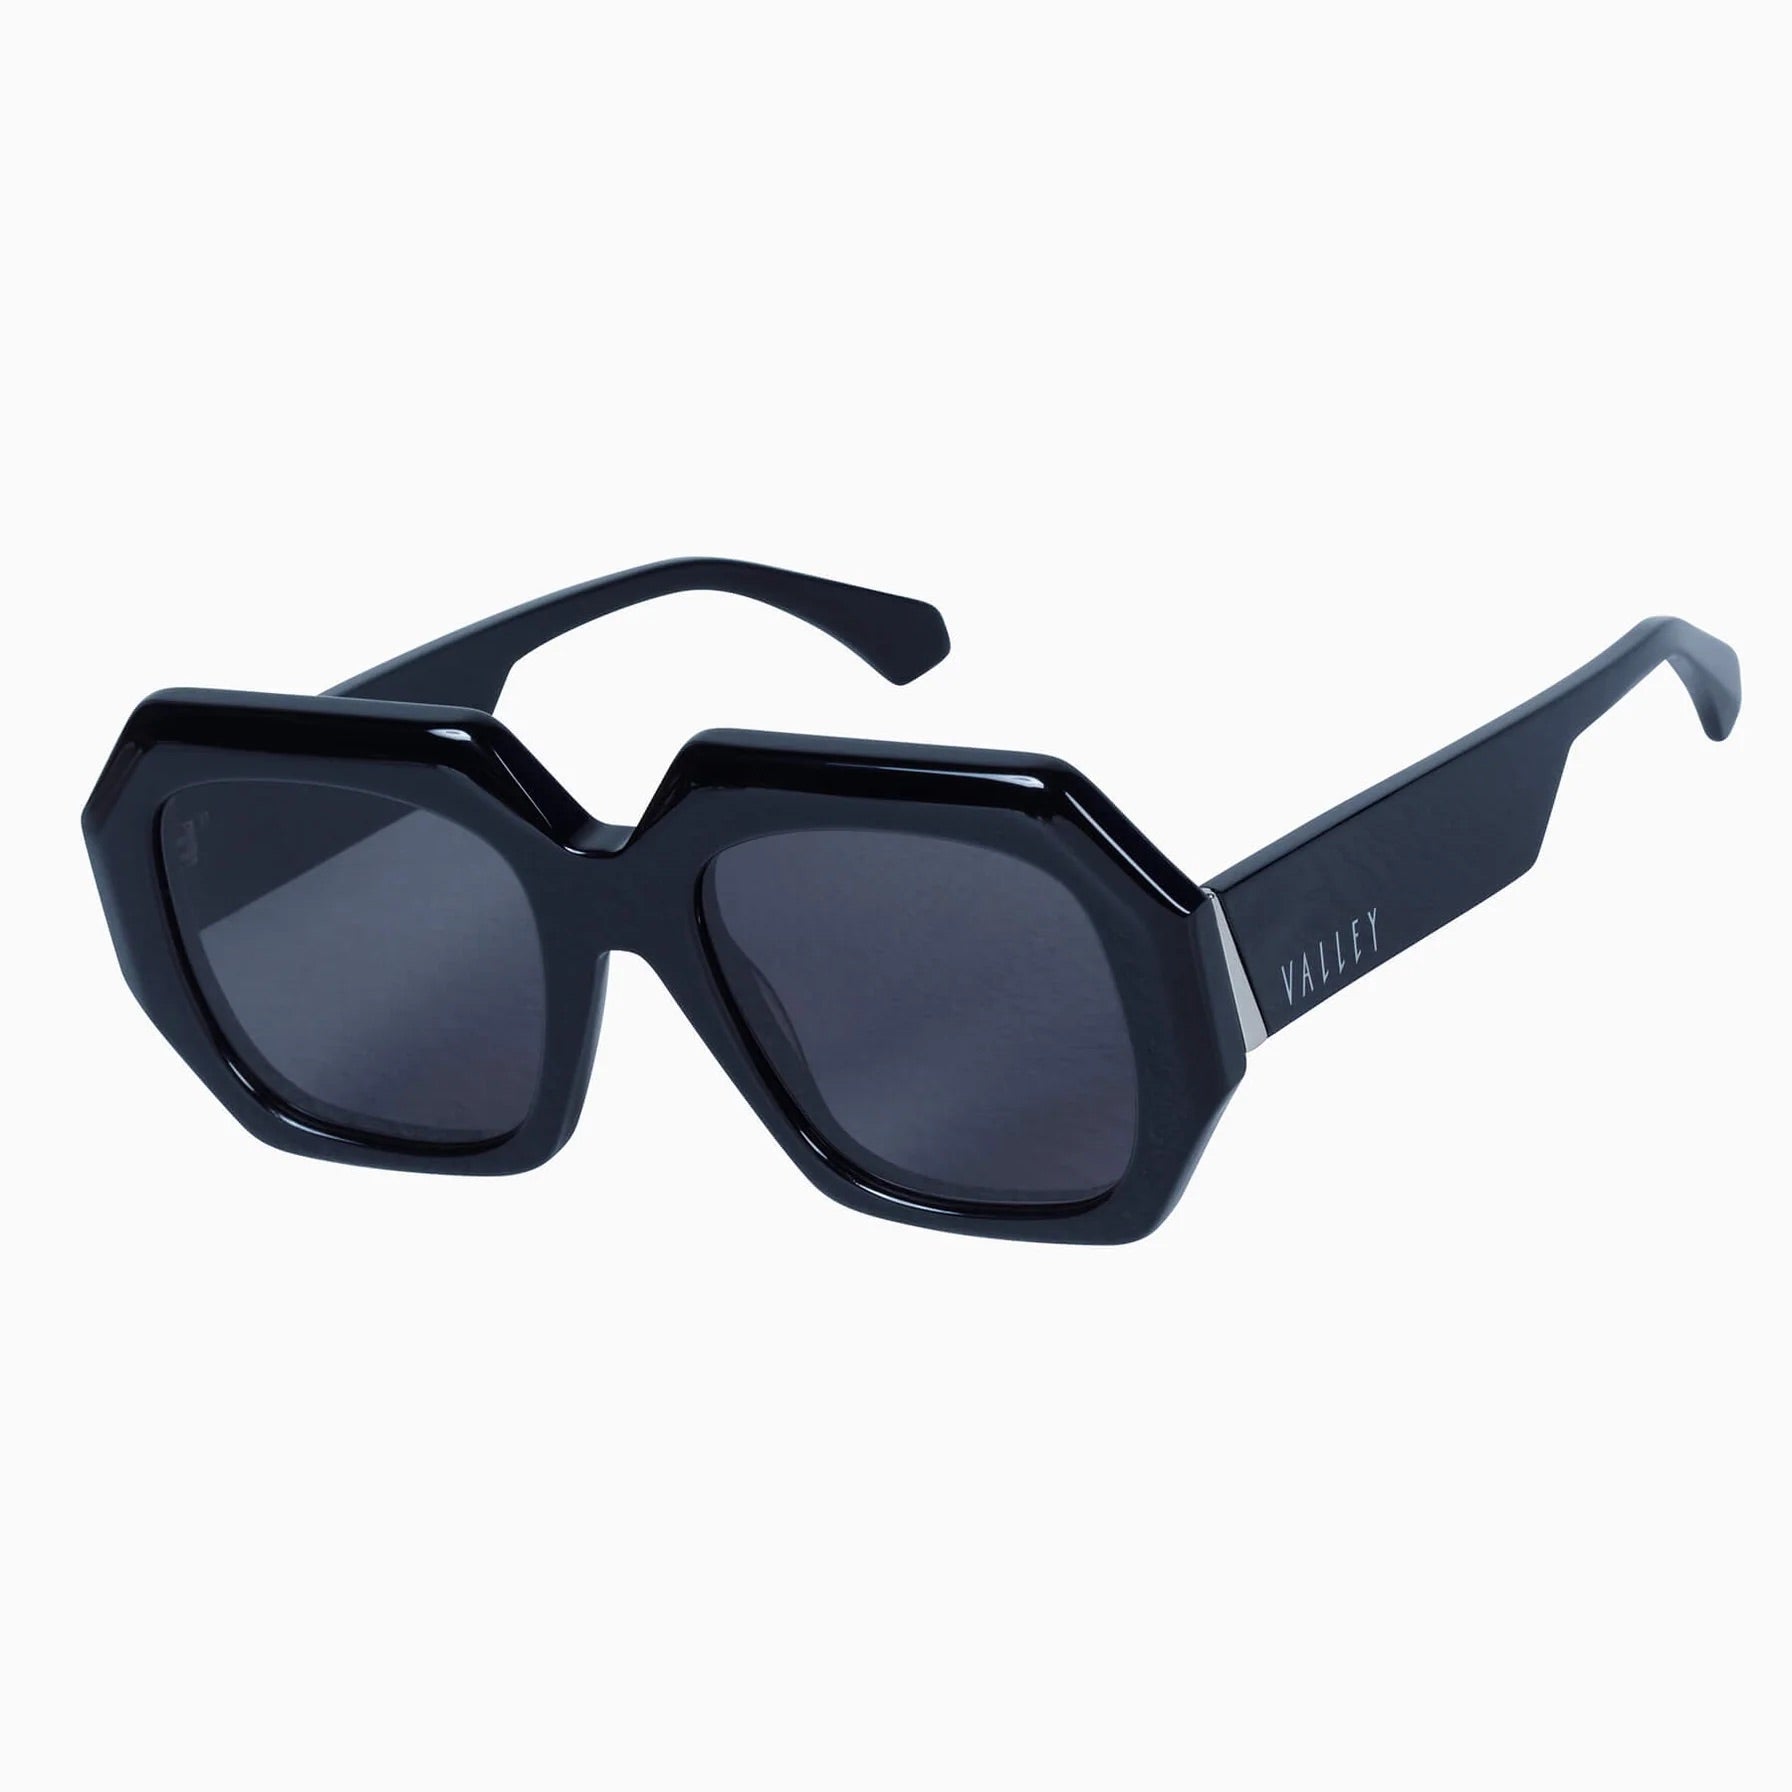 Monolith | Sunglasses - Gloss Black w. Silver Metal Trim / Black Lens